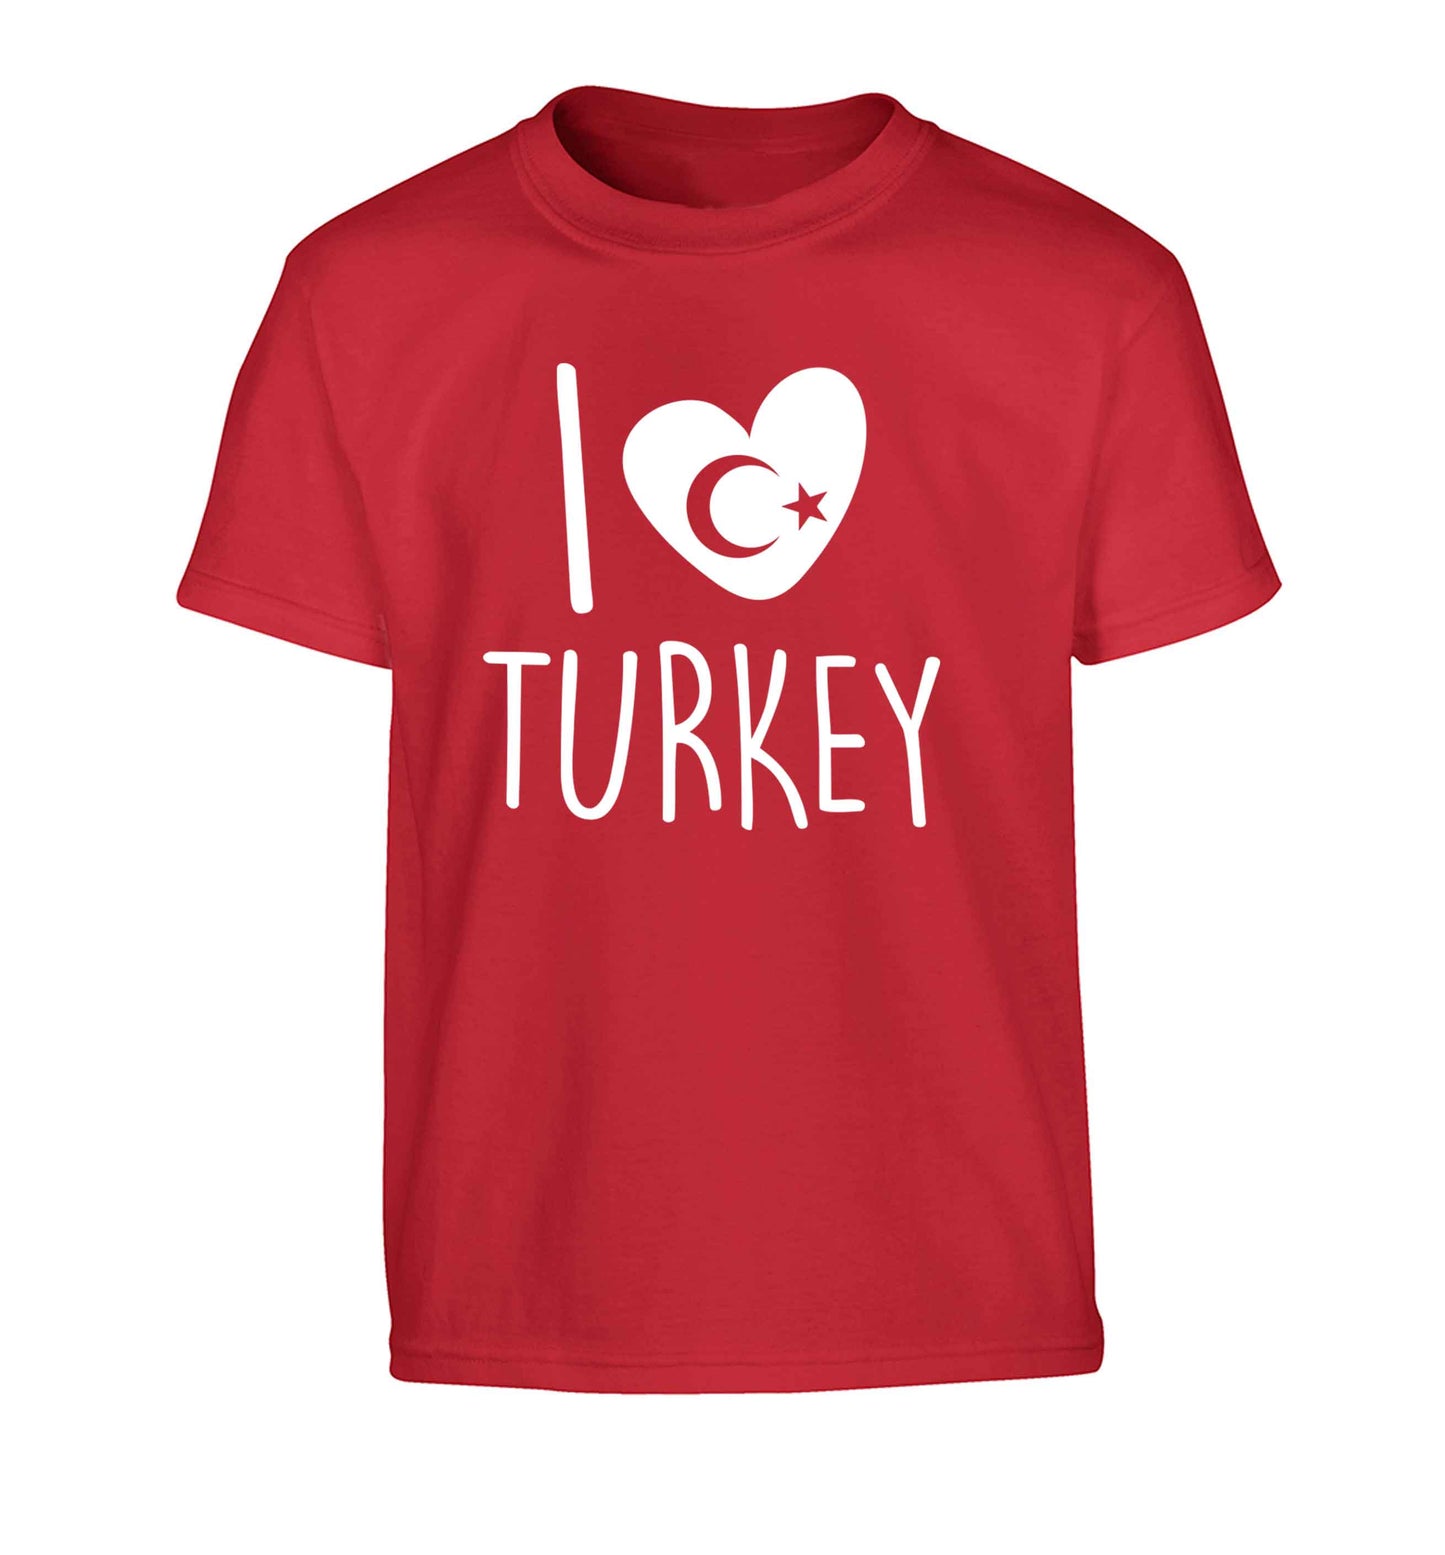 I love Turkey Children's red Tshirt 12-13 Years